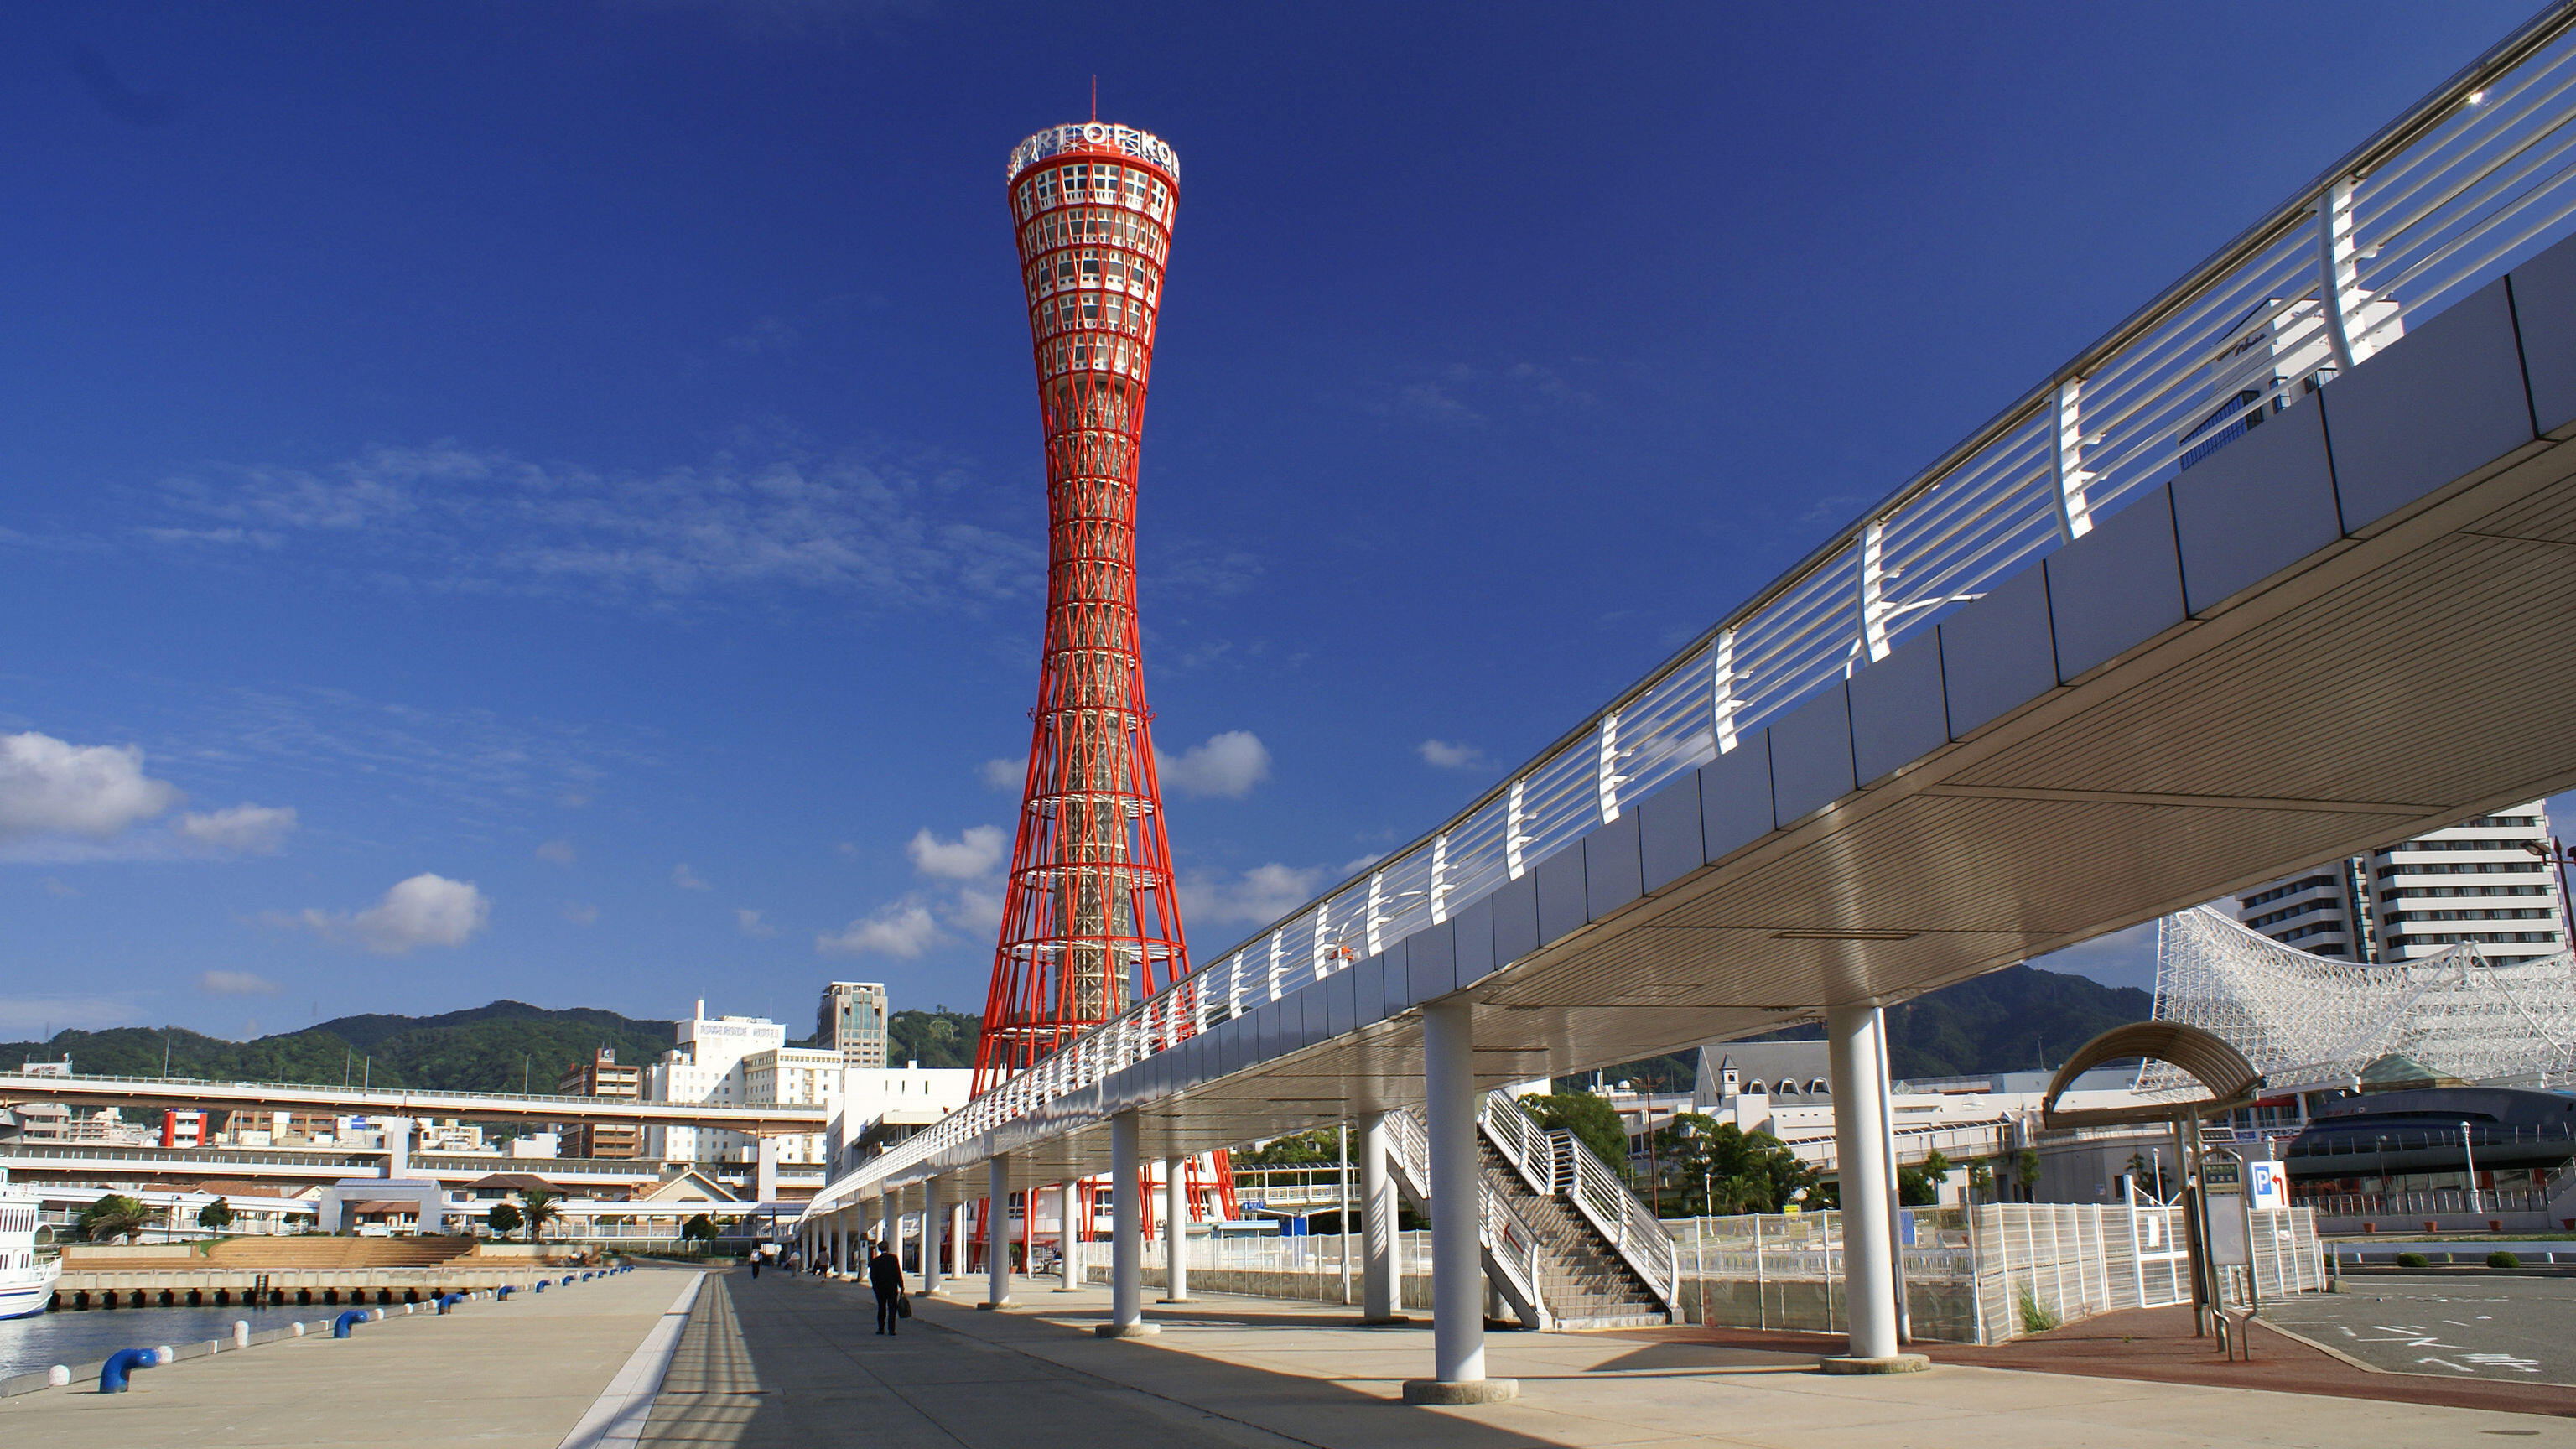 Kobe Tower and the wharf "Nakatottei" of the Kobe harbor (Kobe, Hyogo, Japan)